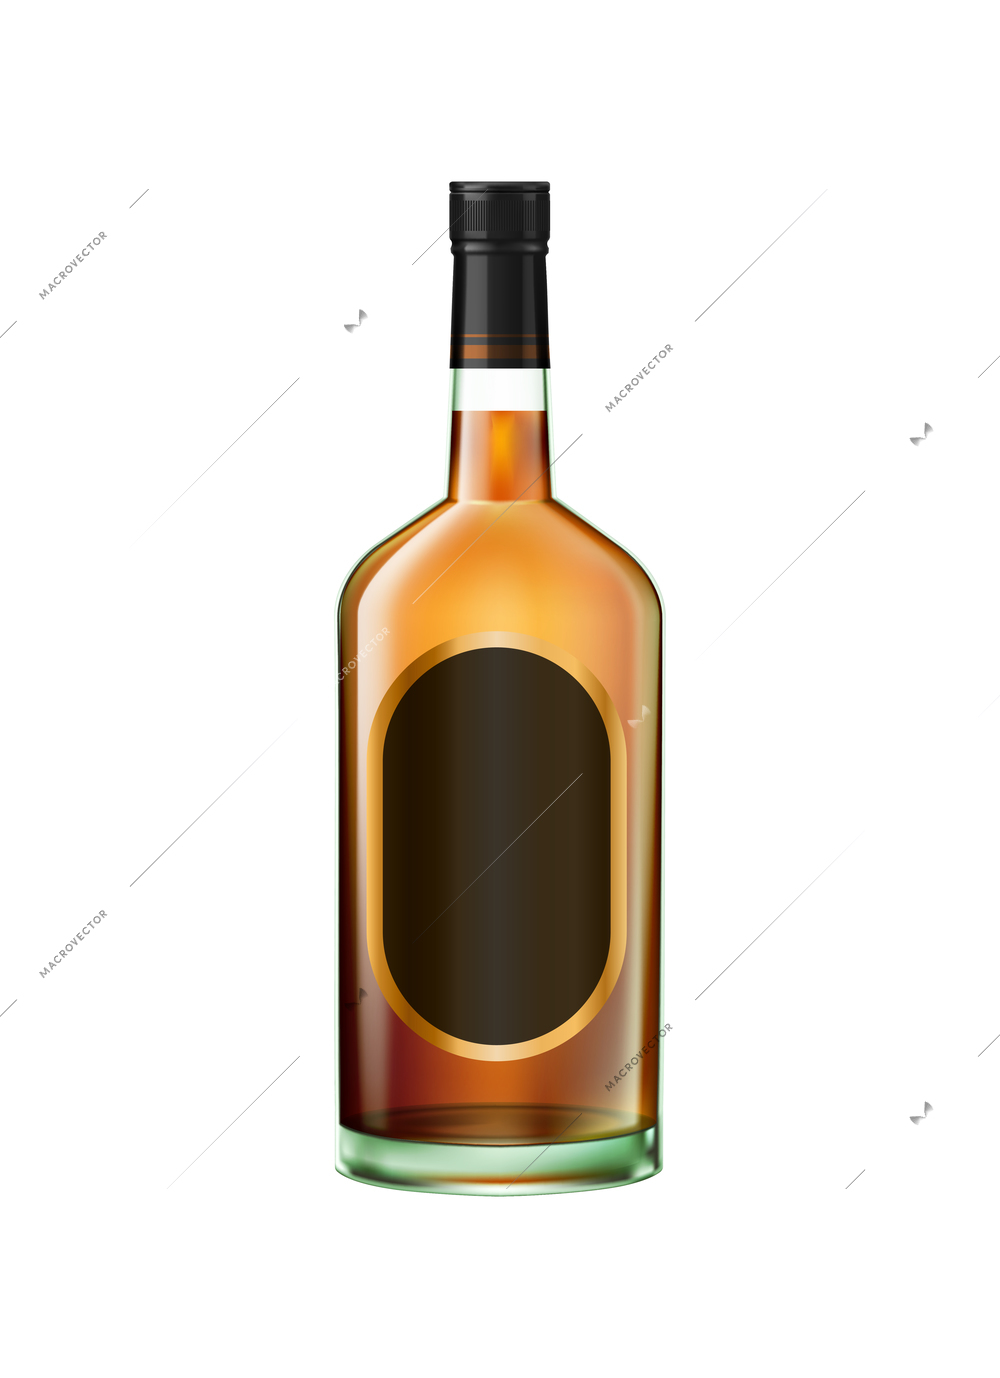 Realistic glass bottle of whisky cognac bourbon vector illustration